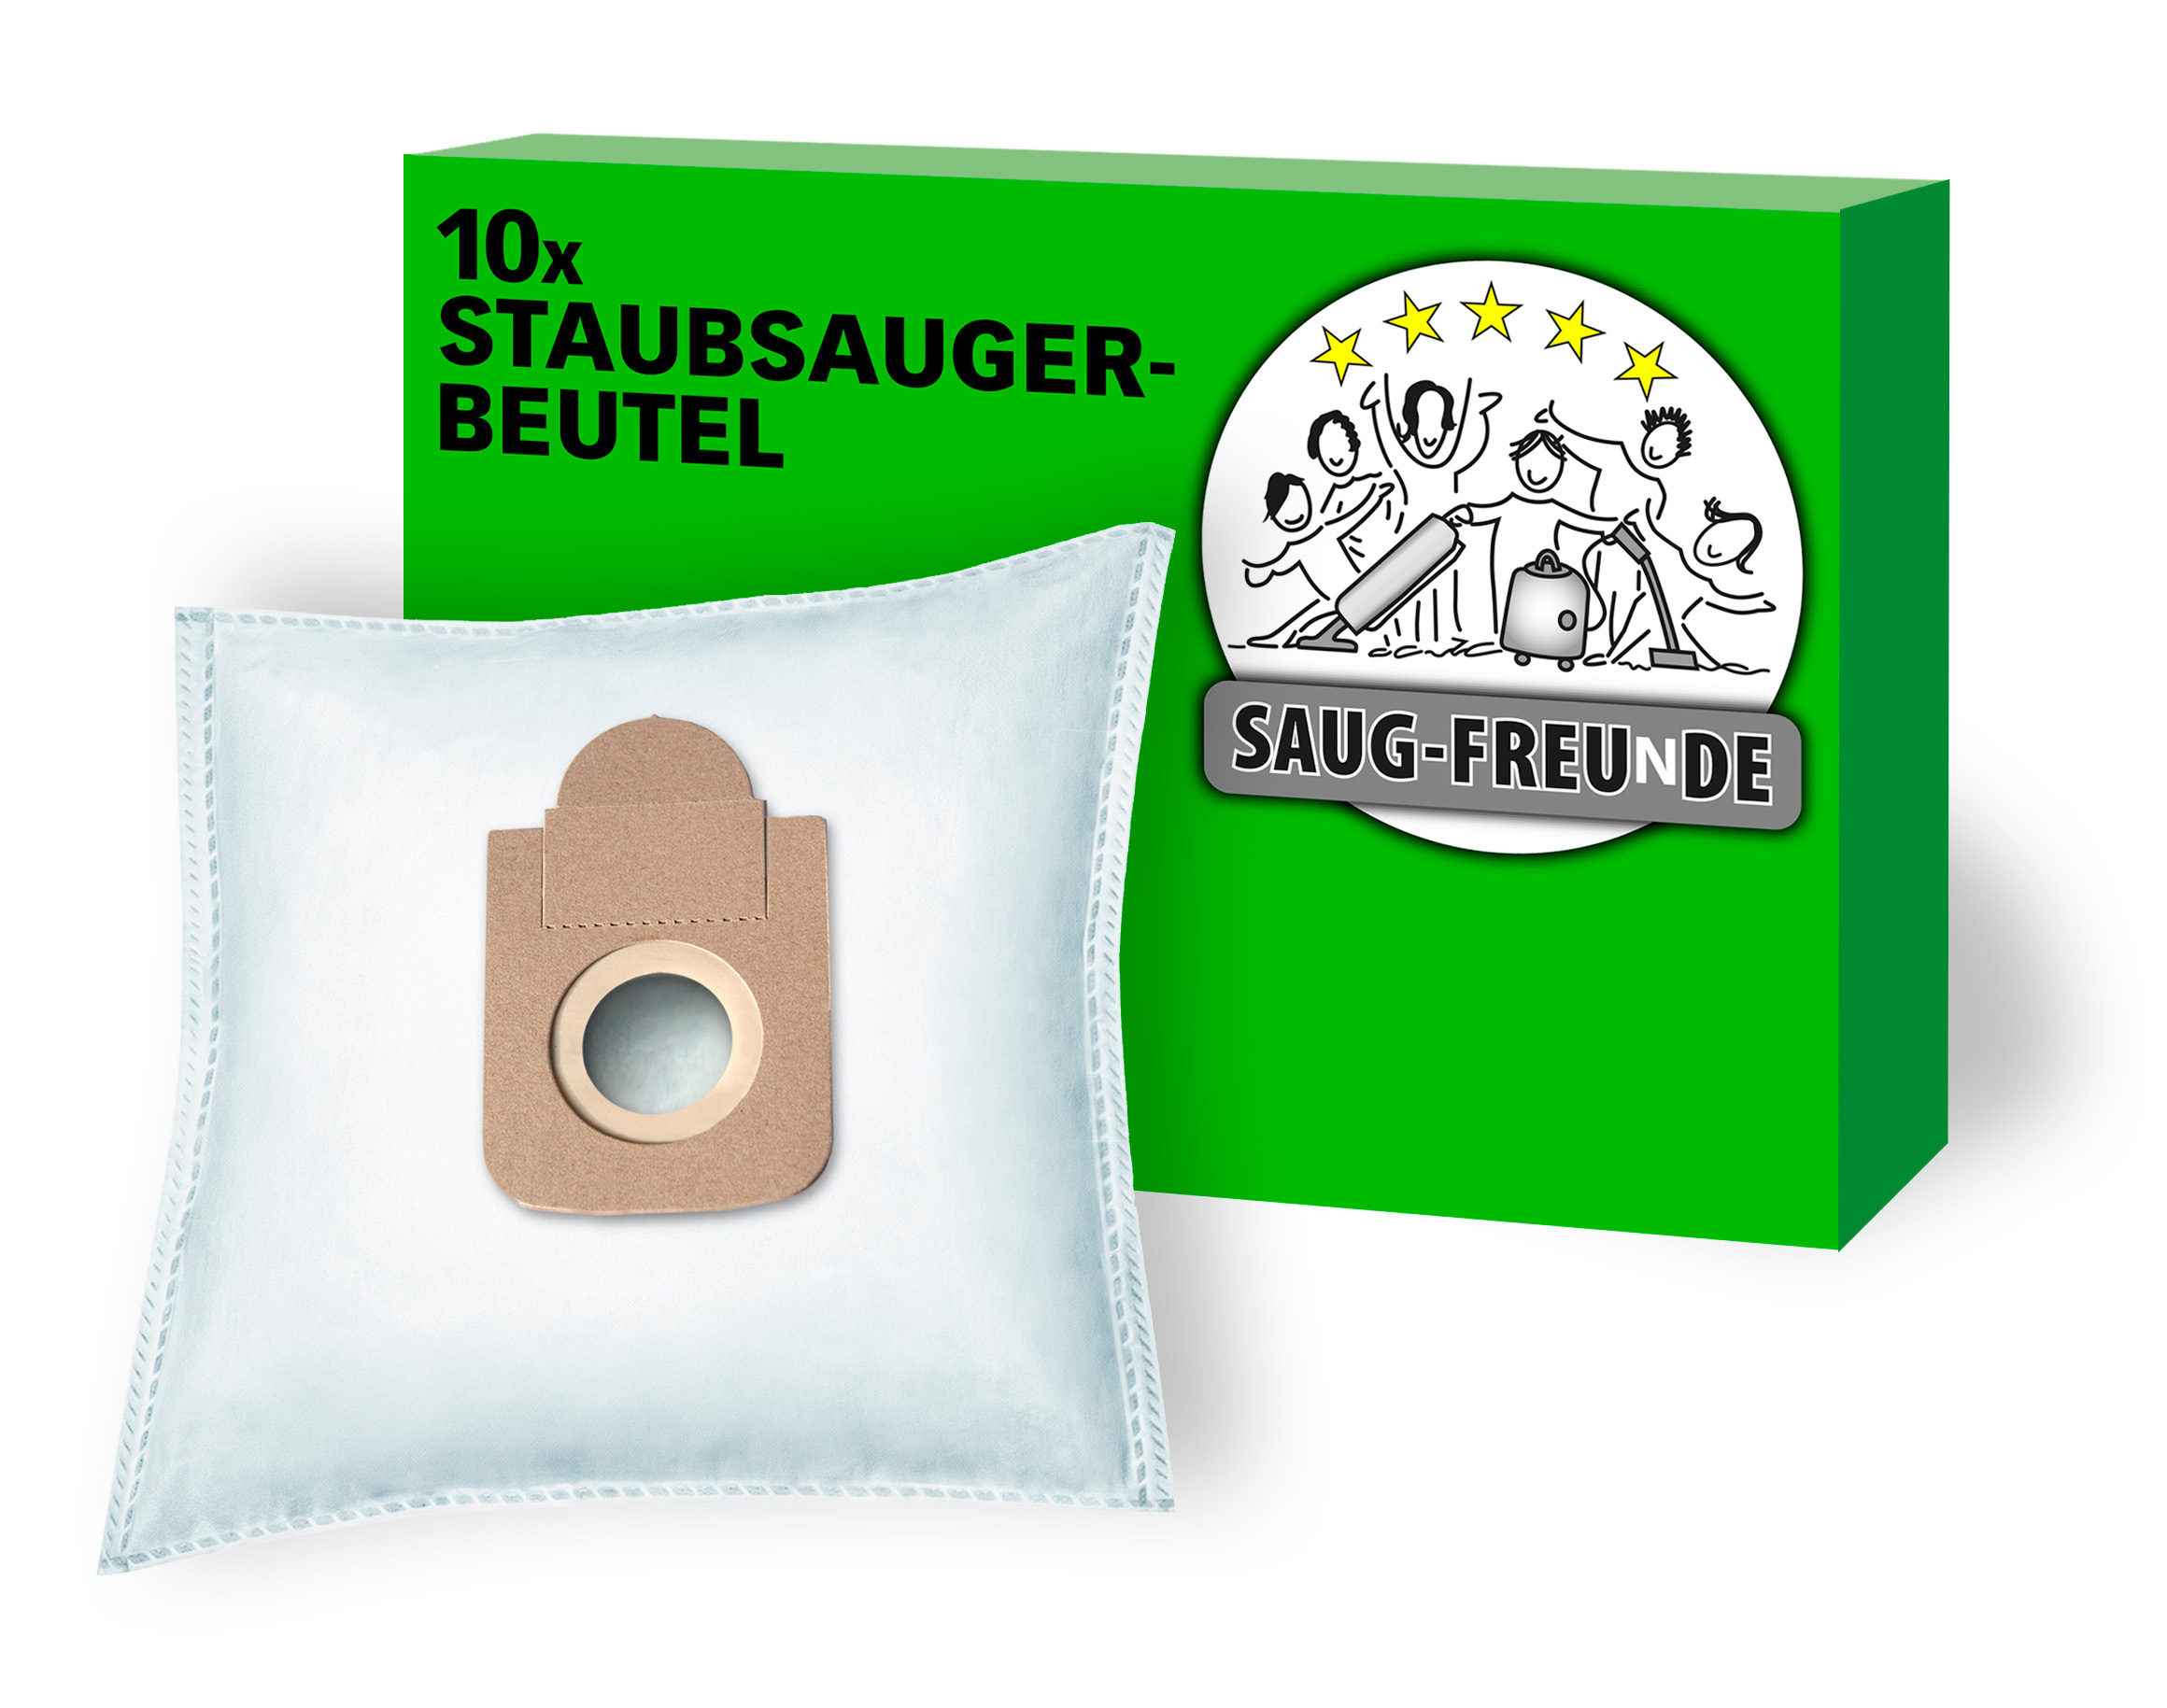 SAUG-FREUNDE Staubsaugerbeutel 10x